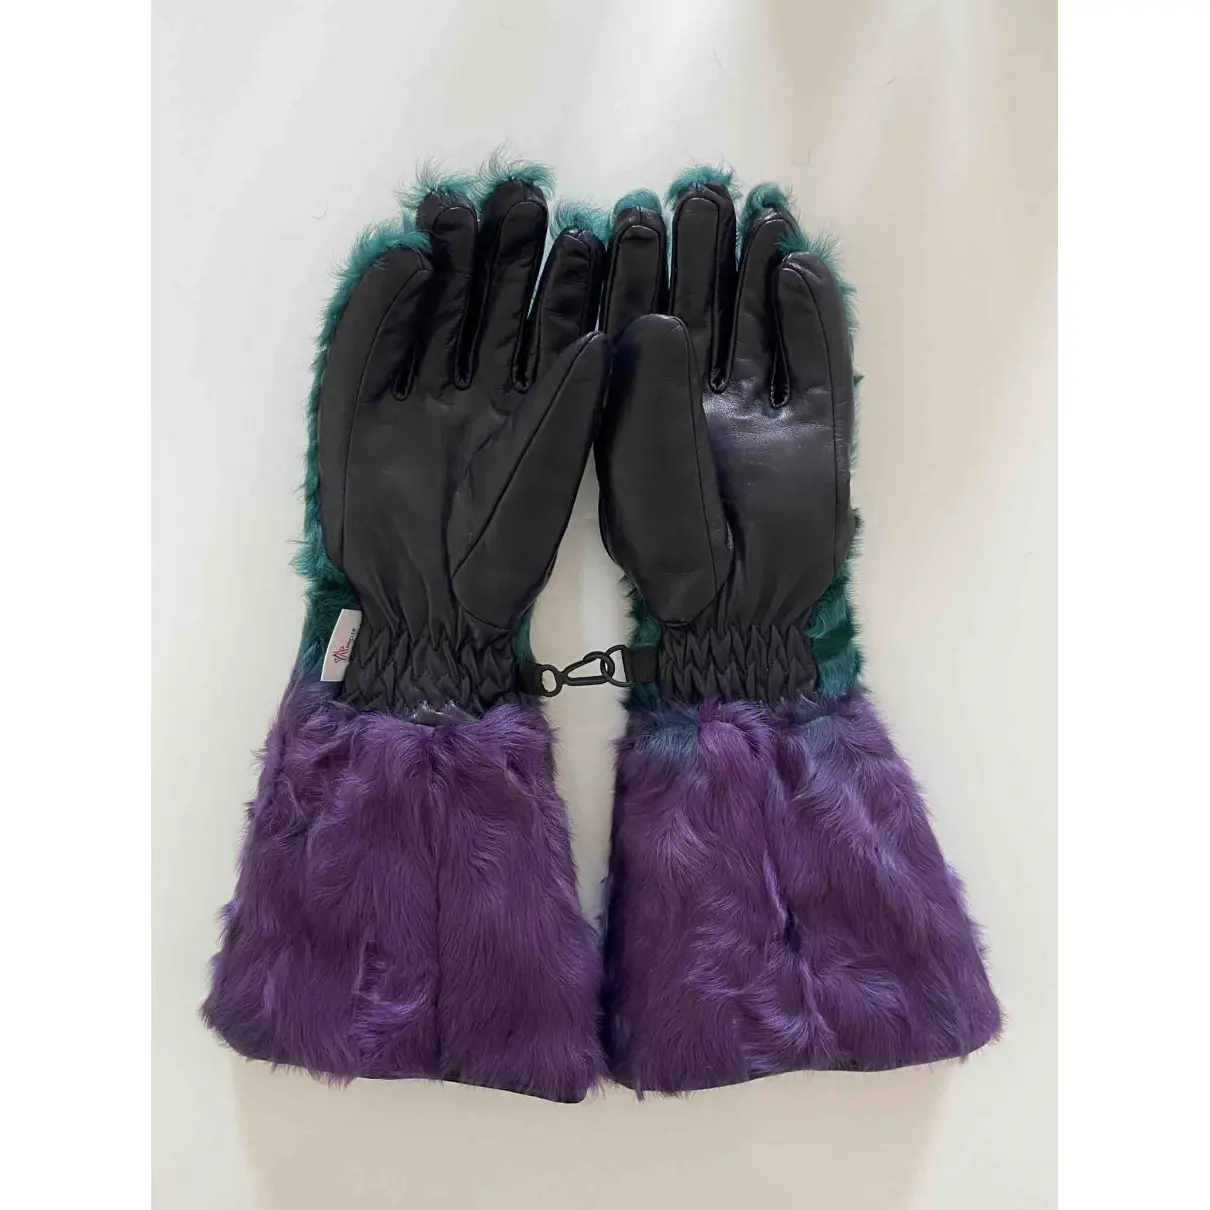 Buy Moncler Genius Moncler Grenoble n°3 leather long gloves online